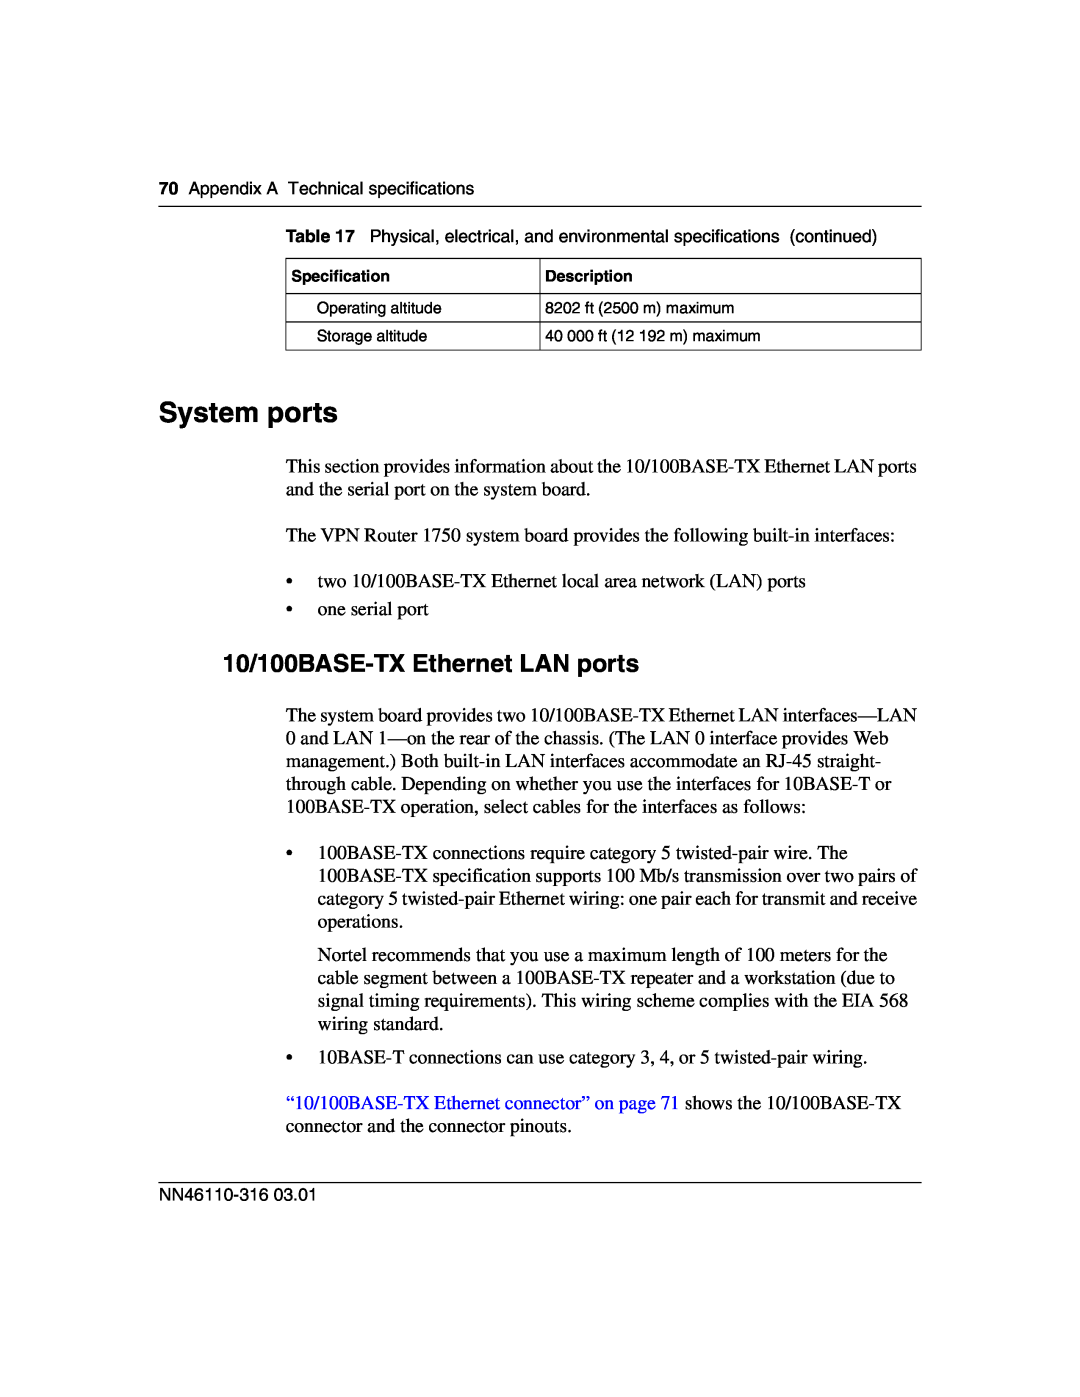 Nortel Networks 1750 manual System ports, 10/100BASE-TX Ethernet LAN ports 